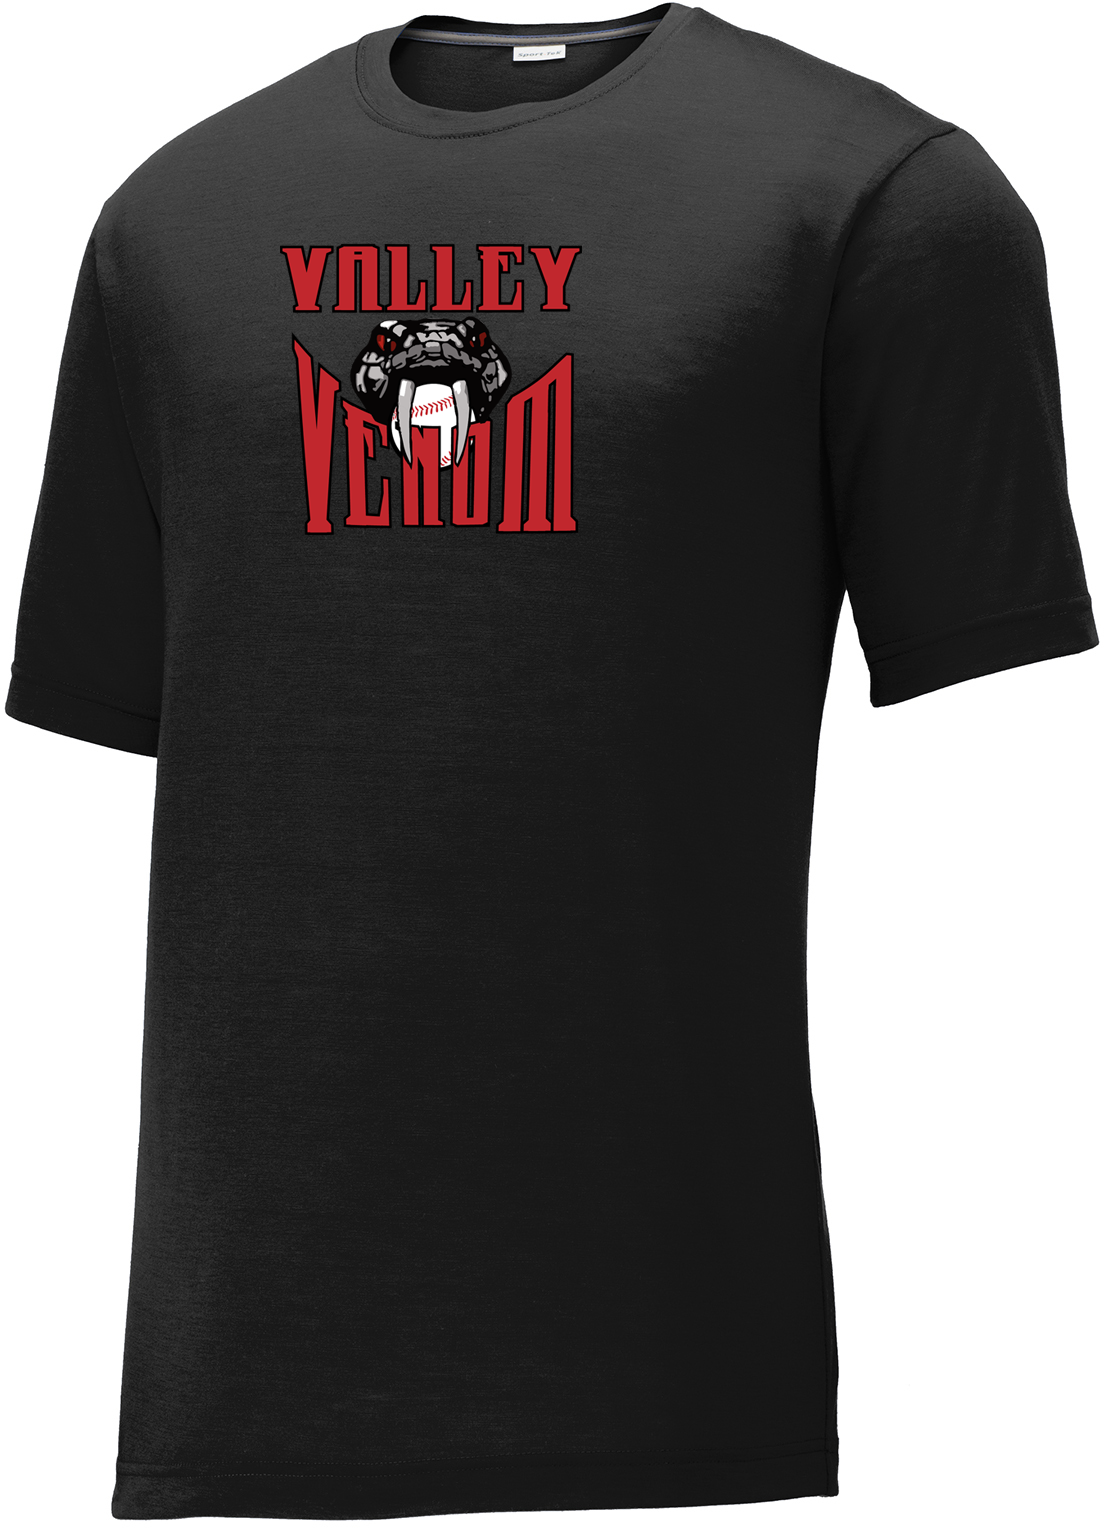 Valley Venom Baseball CottonTouch Performance T-Shirt